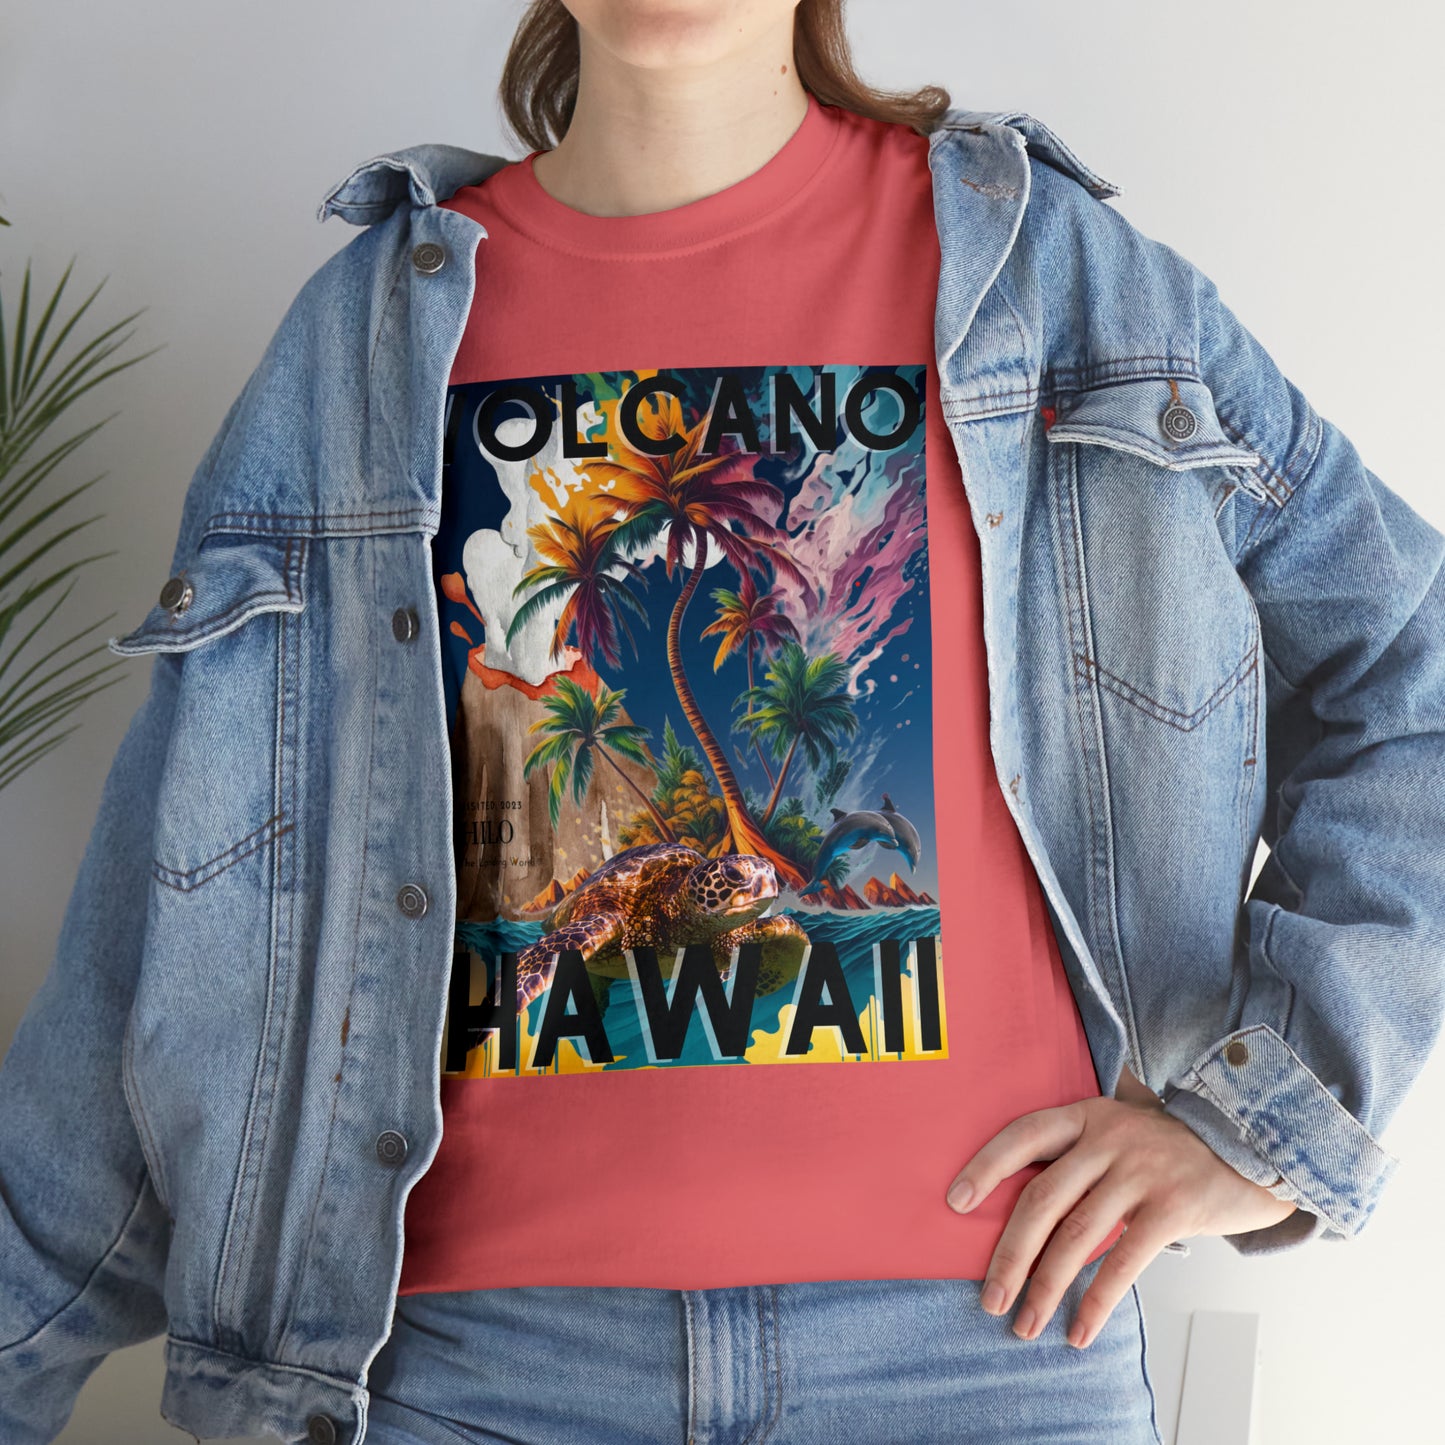 Volcano Hawaii Shirt, Hawaii Volcano Unisex T-Shirt with Dolphins and Sea Turtle